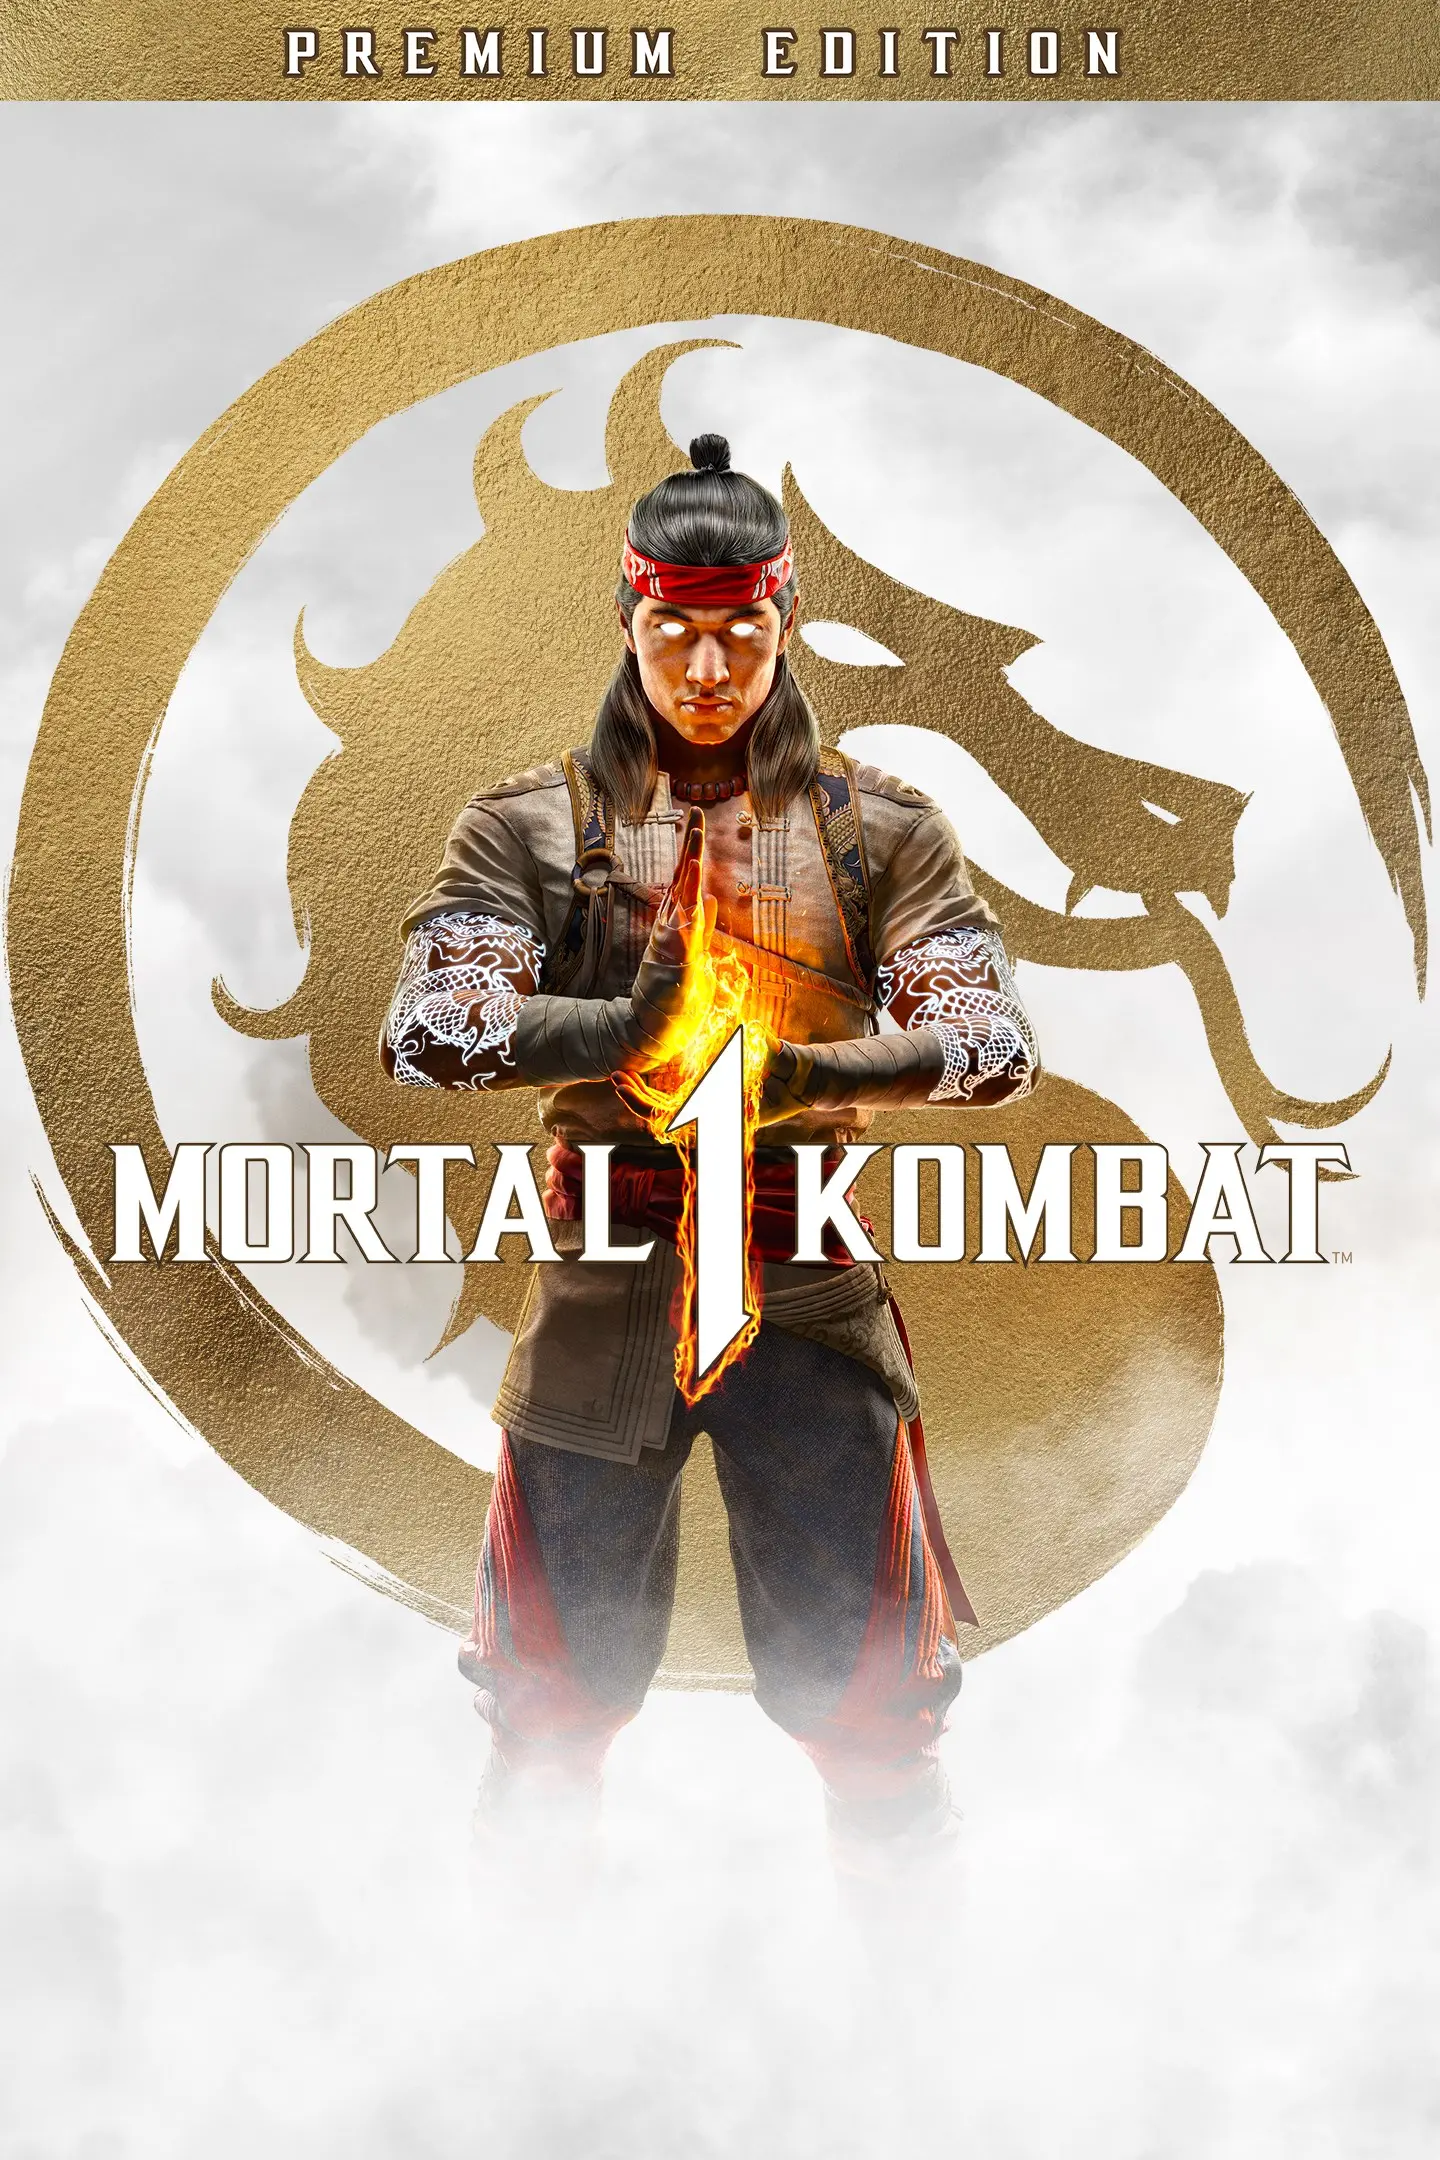 Mortal Kombat 1 Premium Edition (PC) - Steam - Digital Code